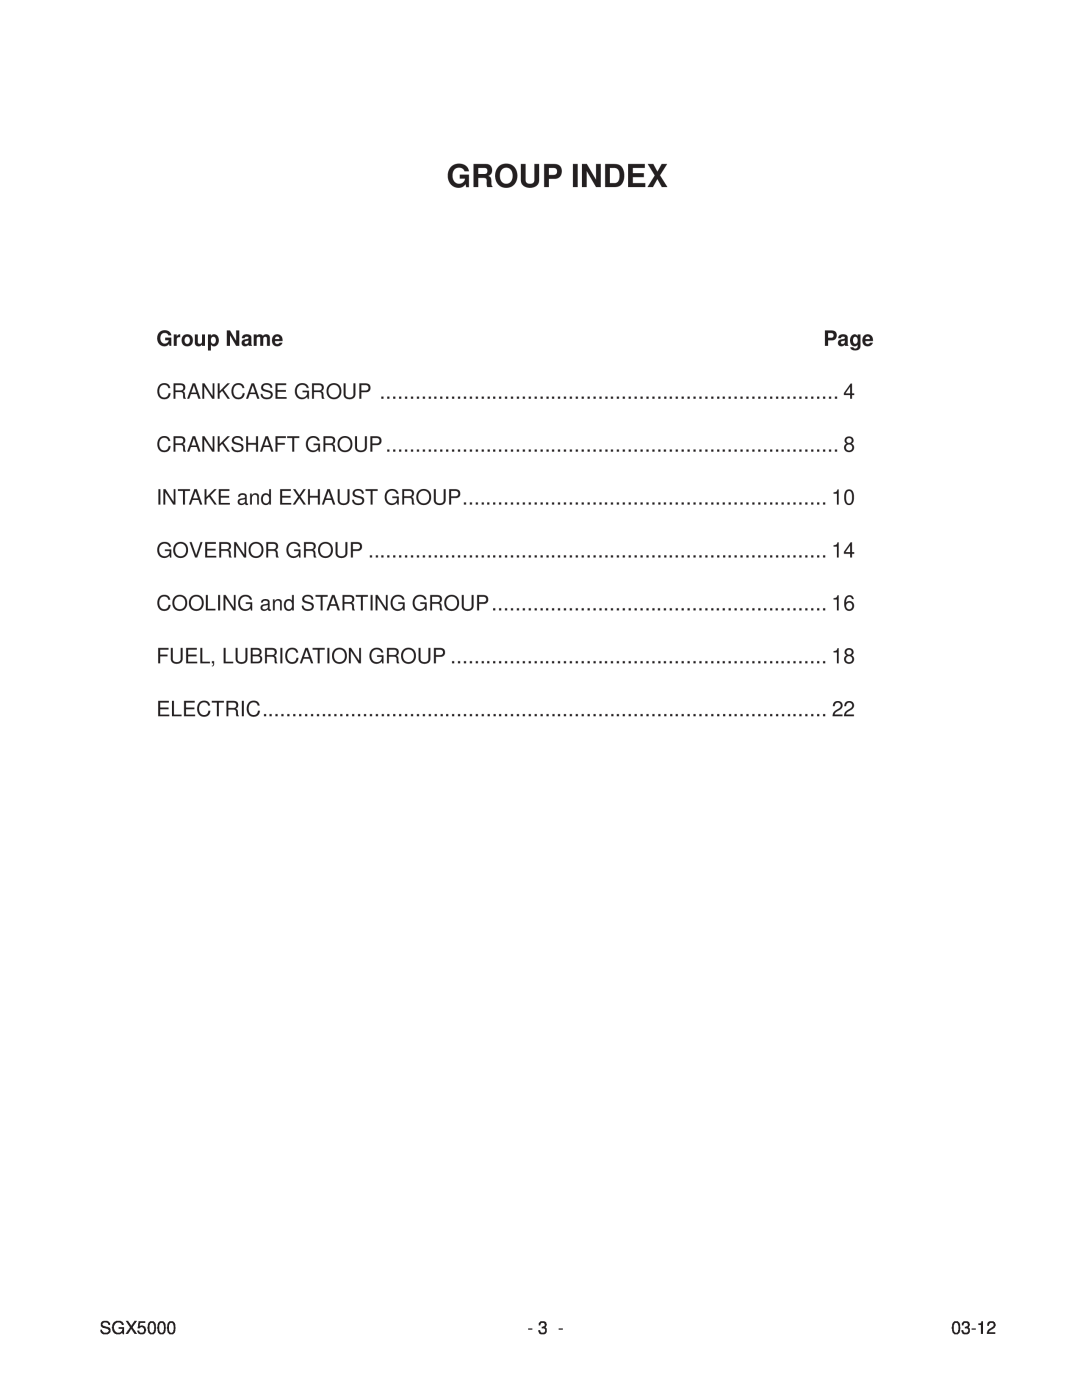 Subaru SGX5000 manual Group Index, Group Name 